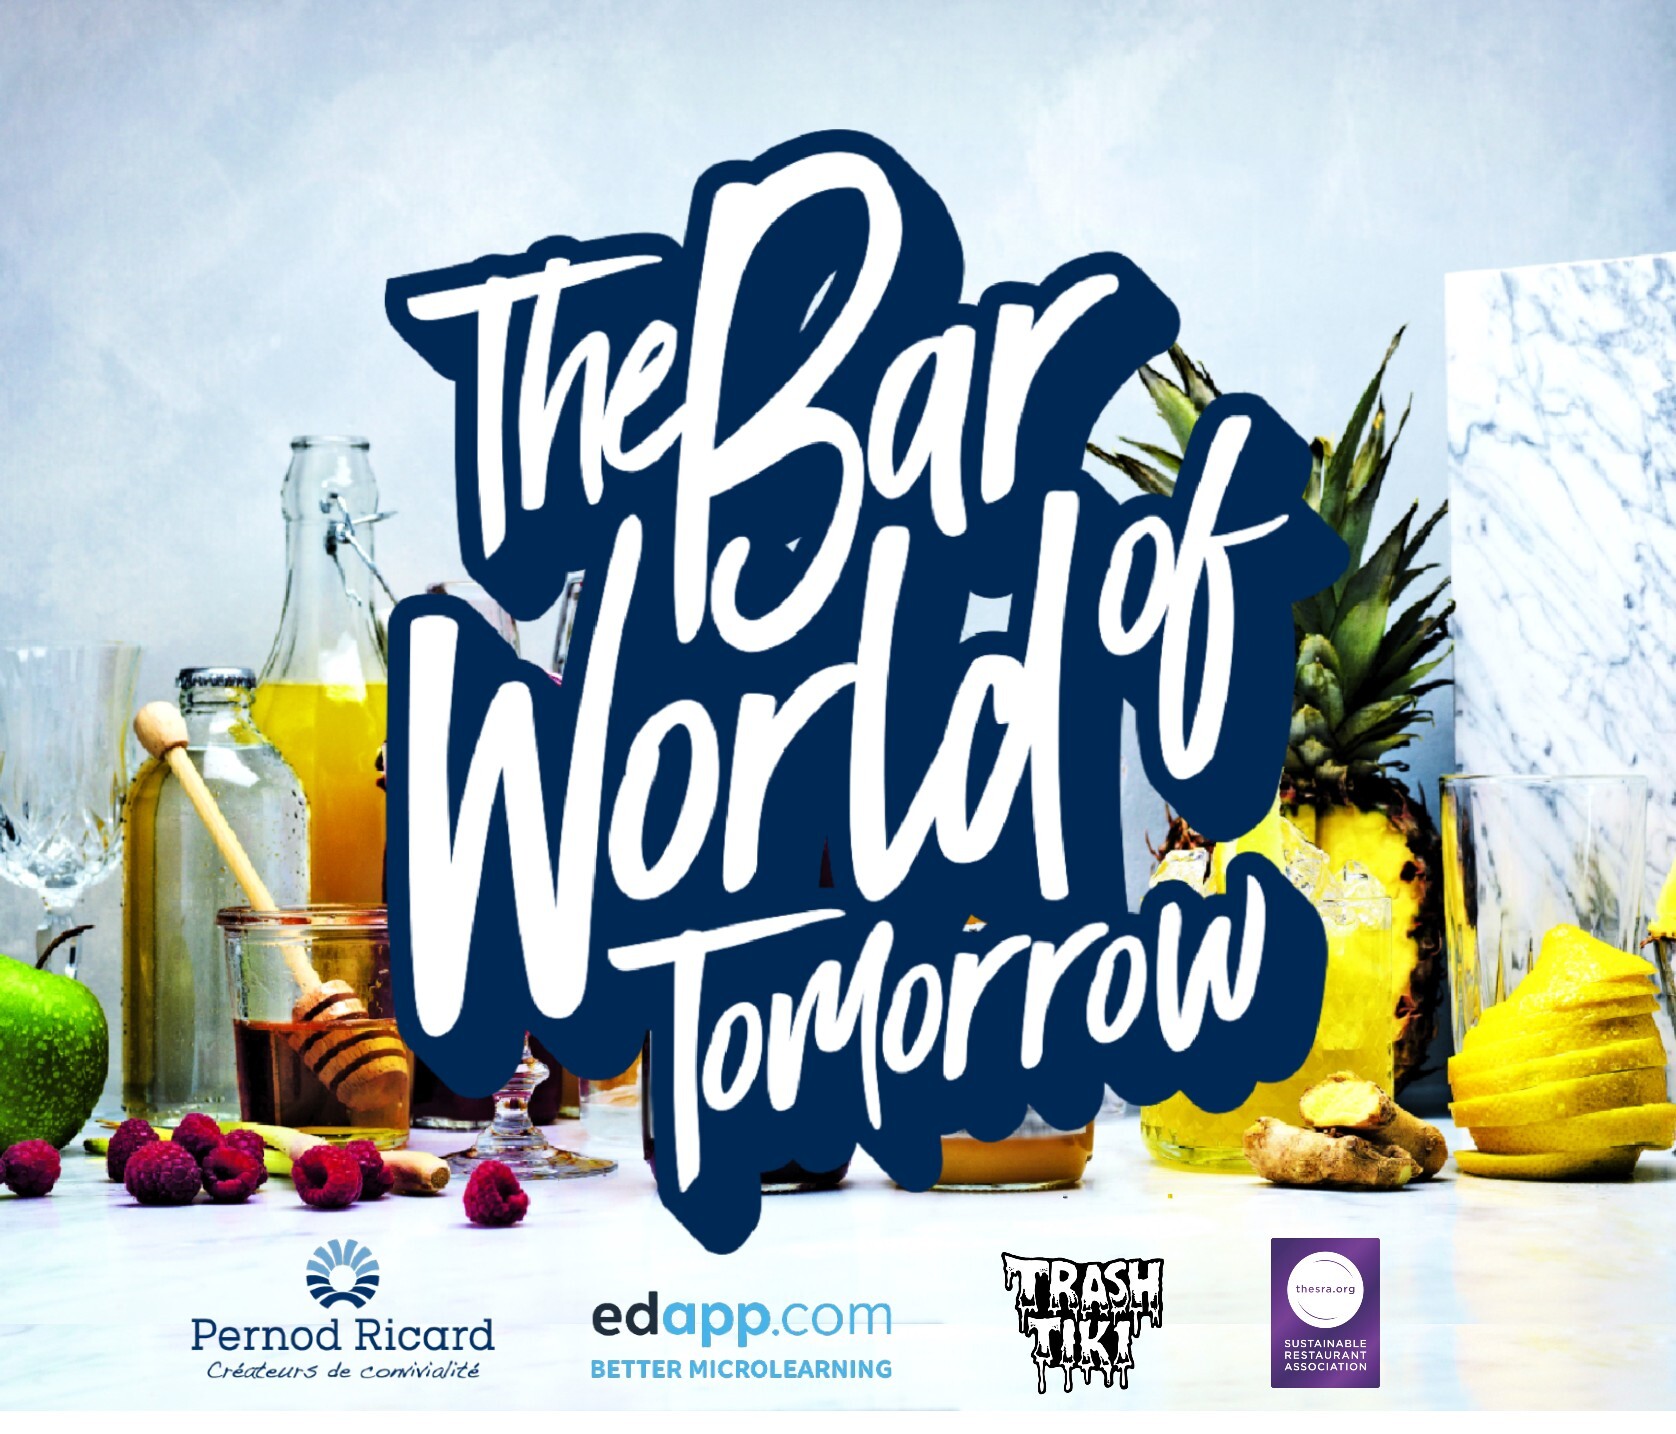 Aplikacja The Bar World of Tomorrow